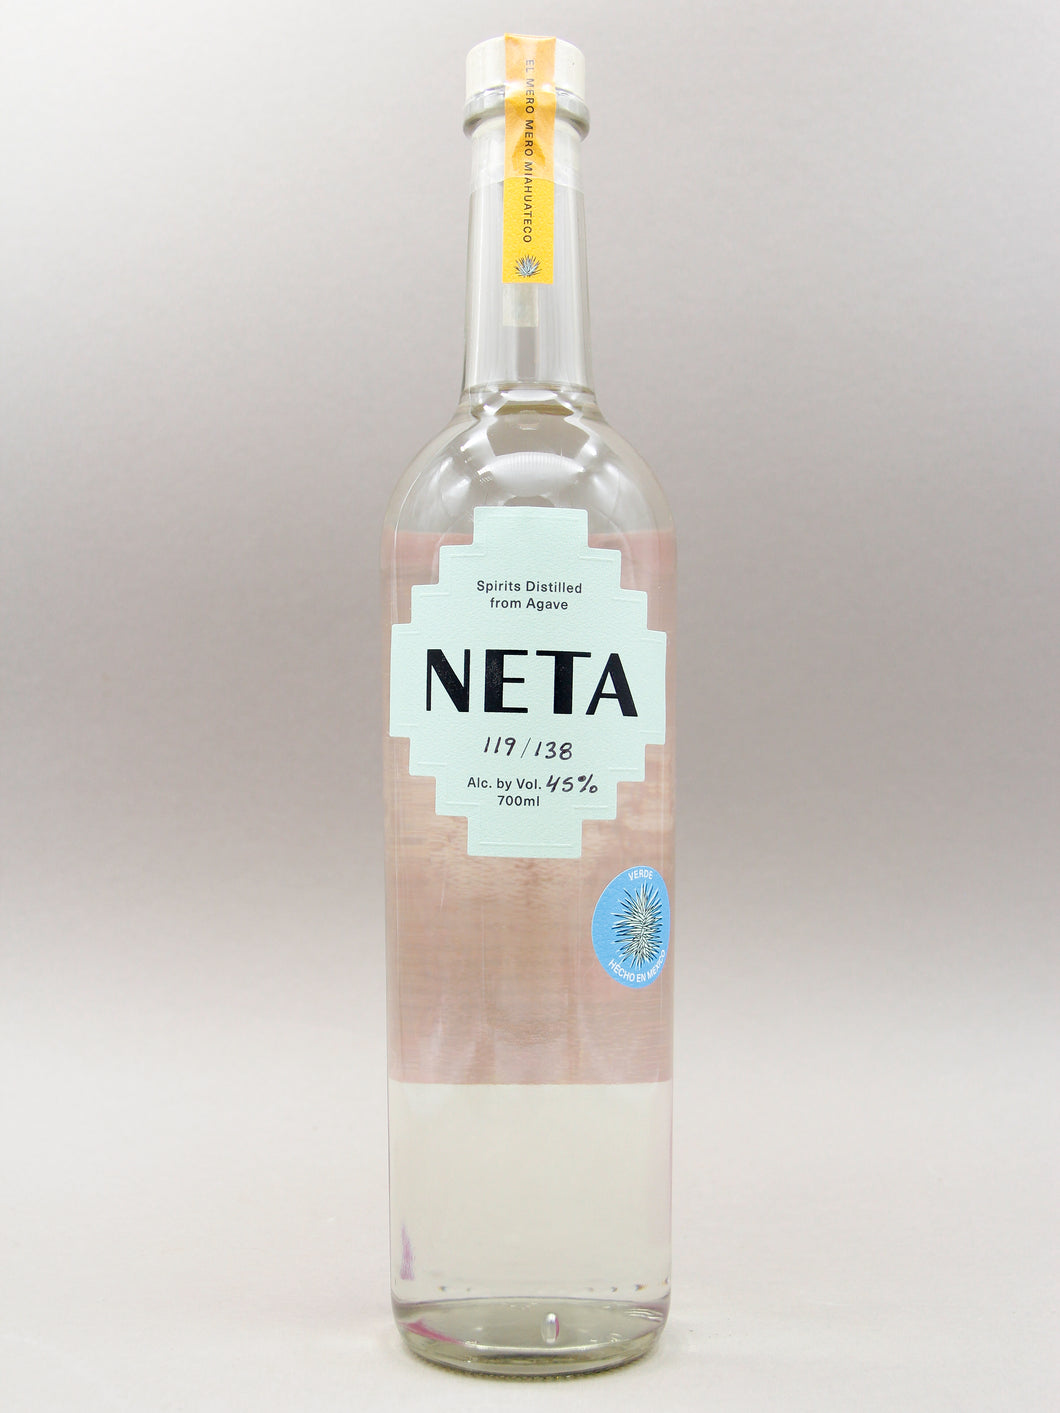 Neta, Cuixe Verde, Destilado De 100% Agave, Miahuatlán Oaxaca 2022 (45%, 70cl)